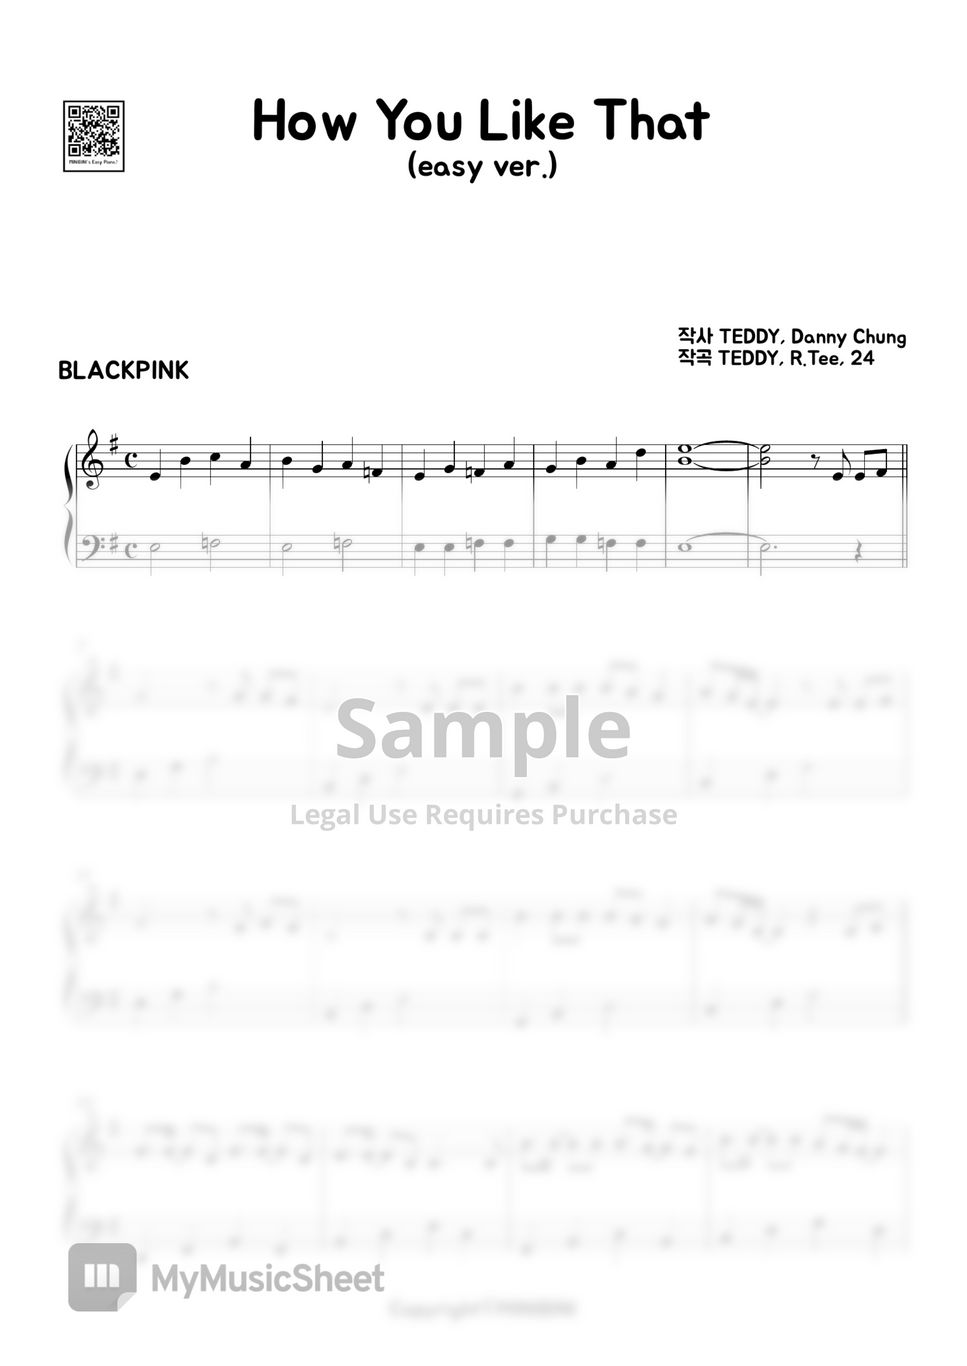 BLACKPINK (블랙핑크) - How You Like That (Easy Version) by MINIBINI